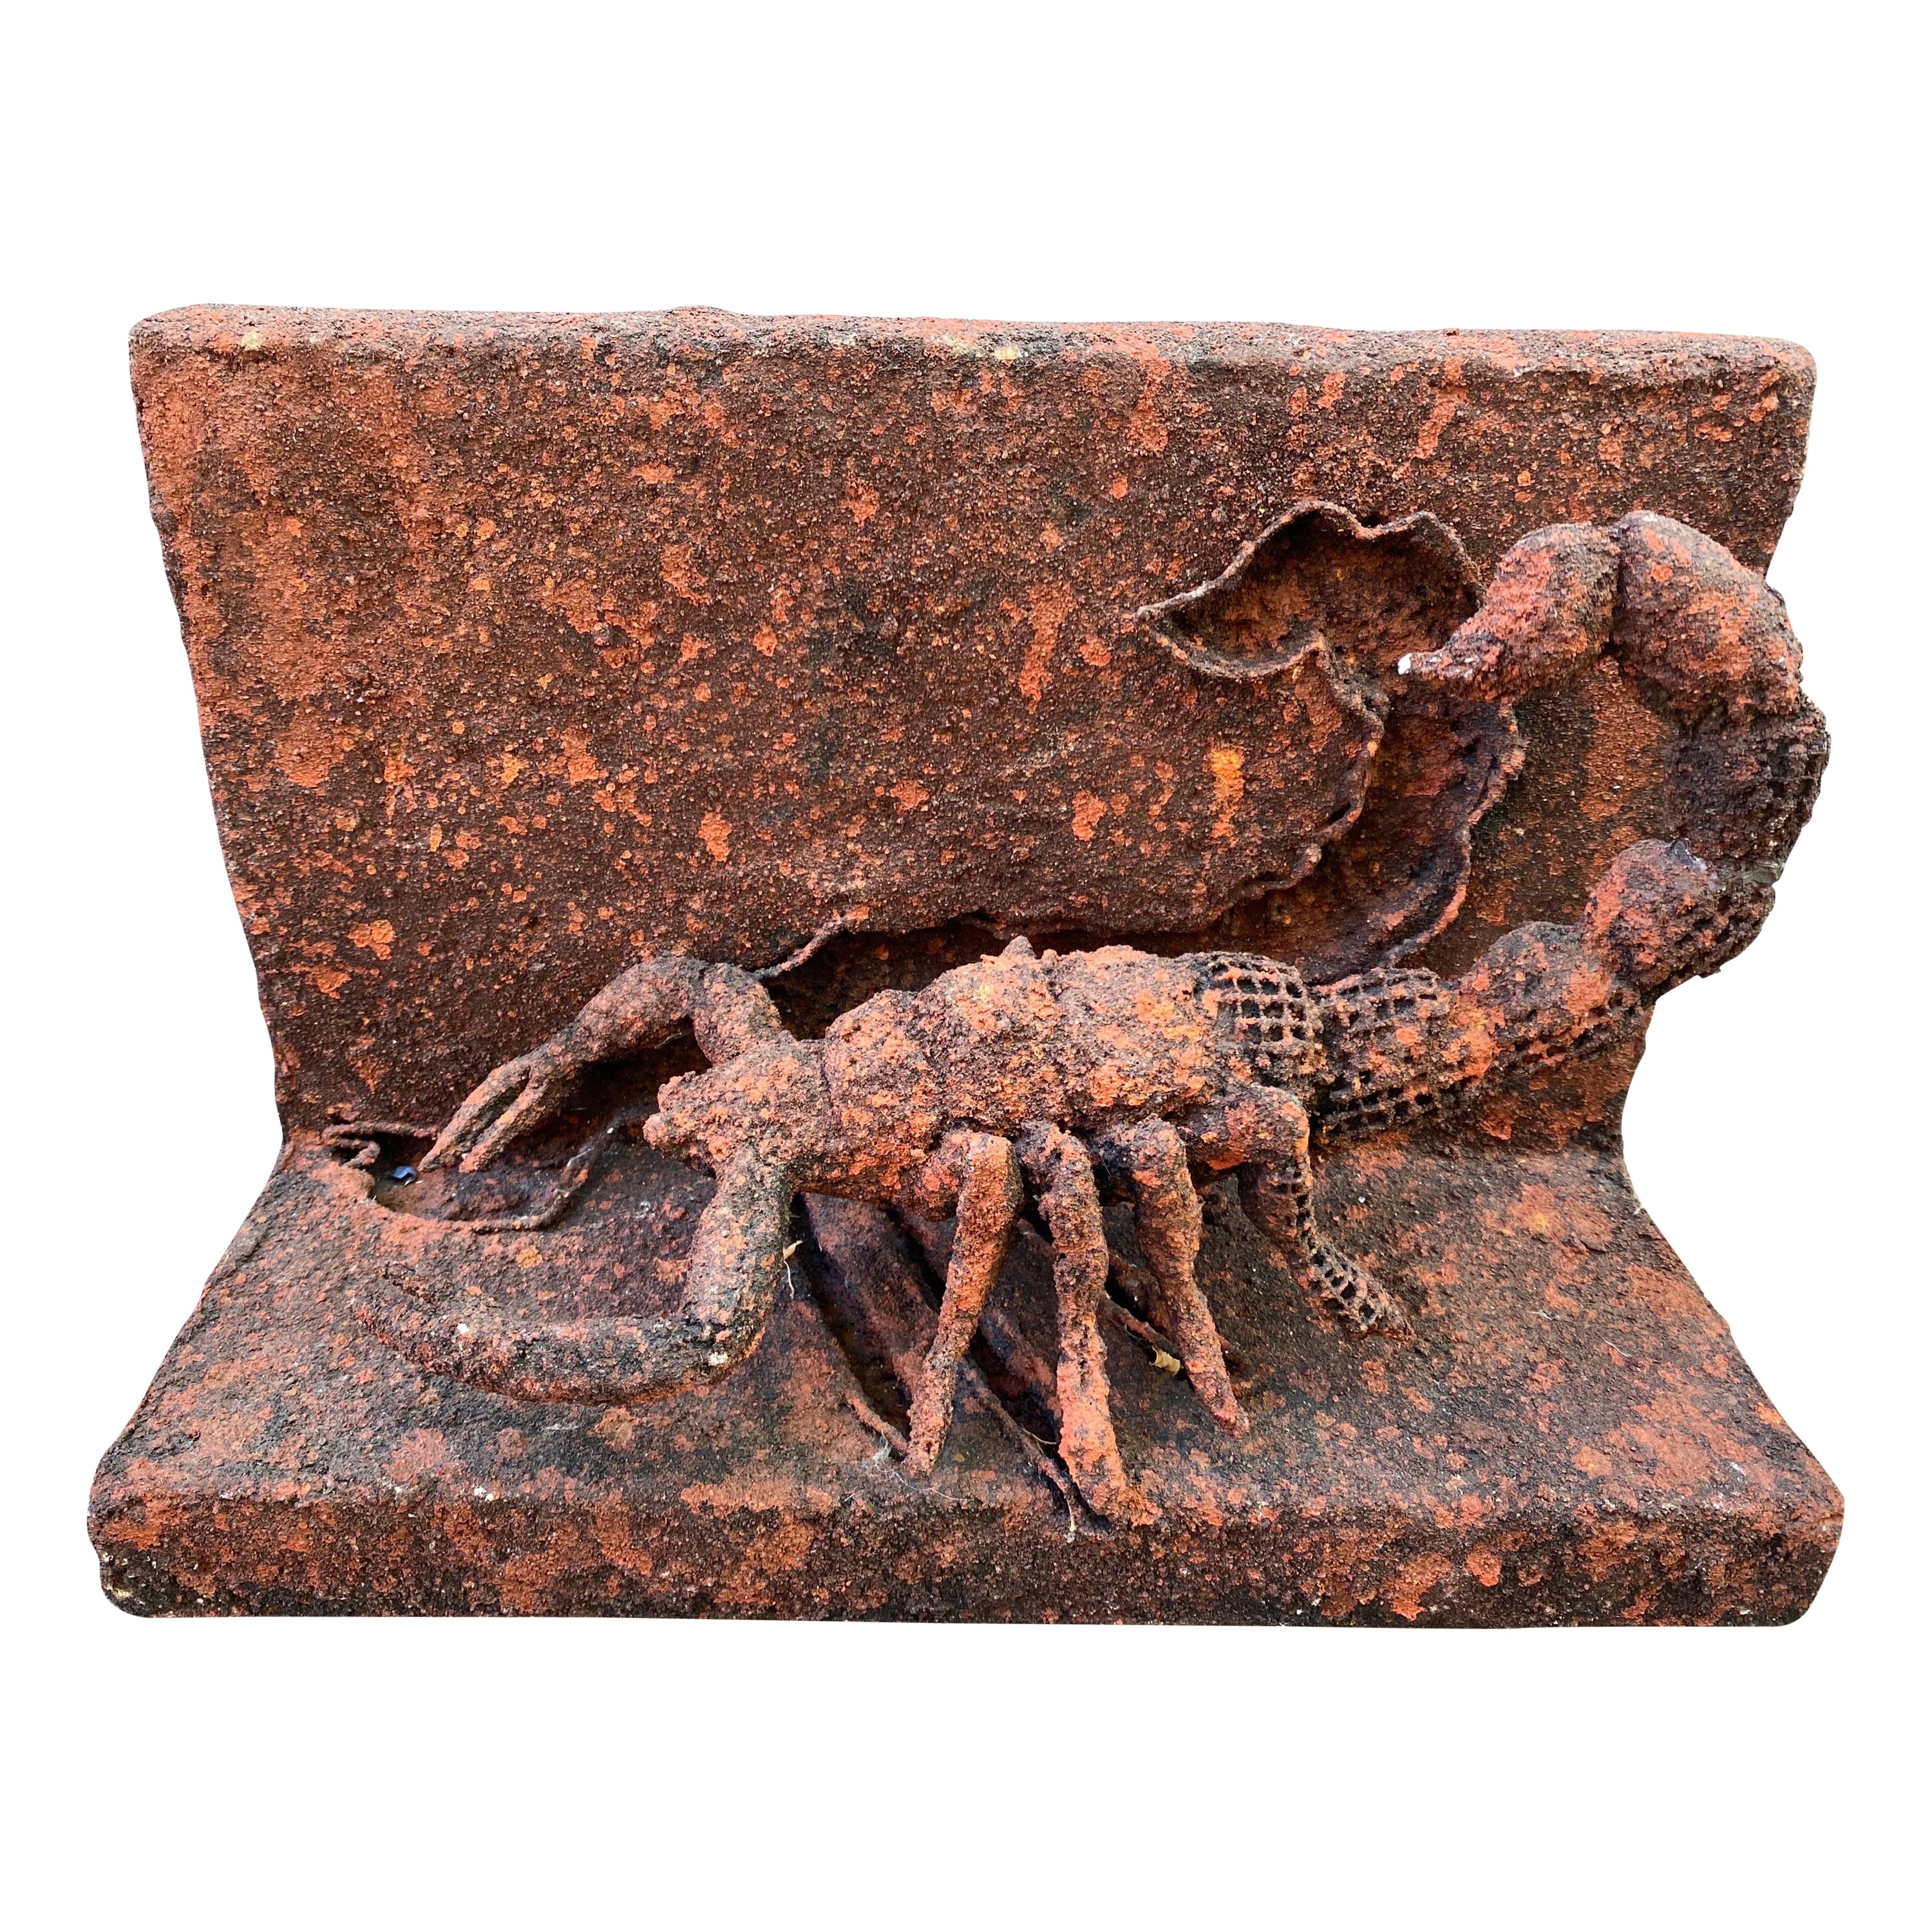 Zodiac Scorpion Model For Sale